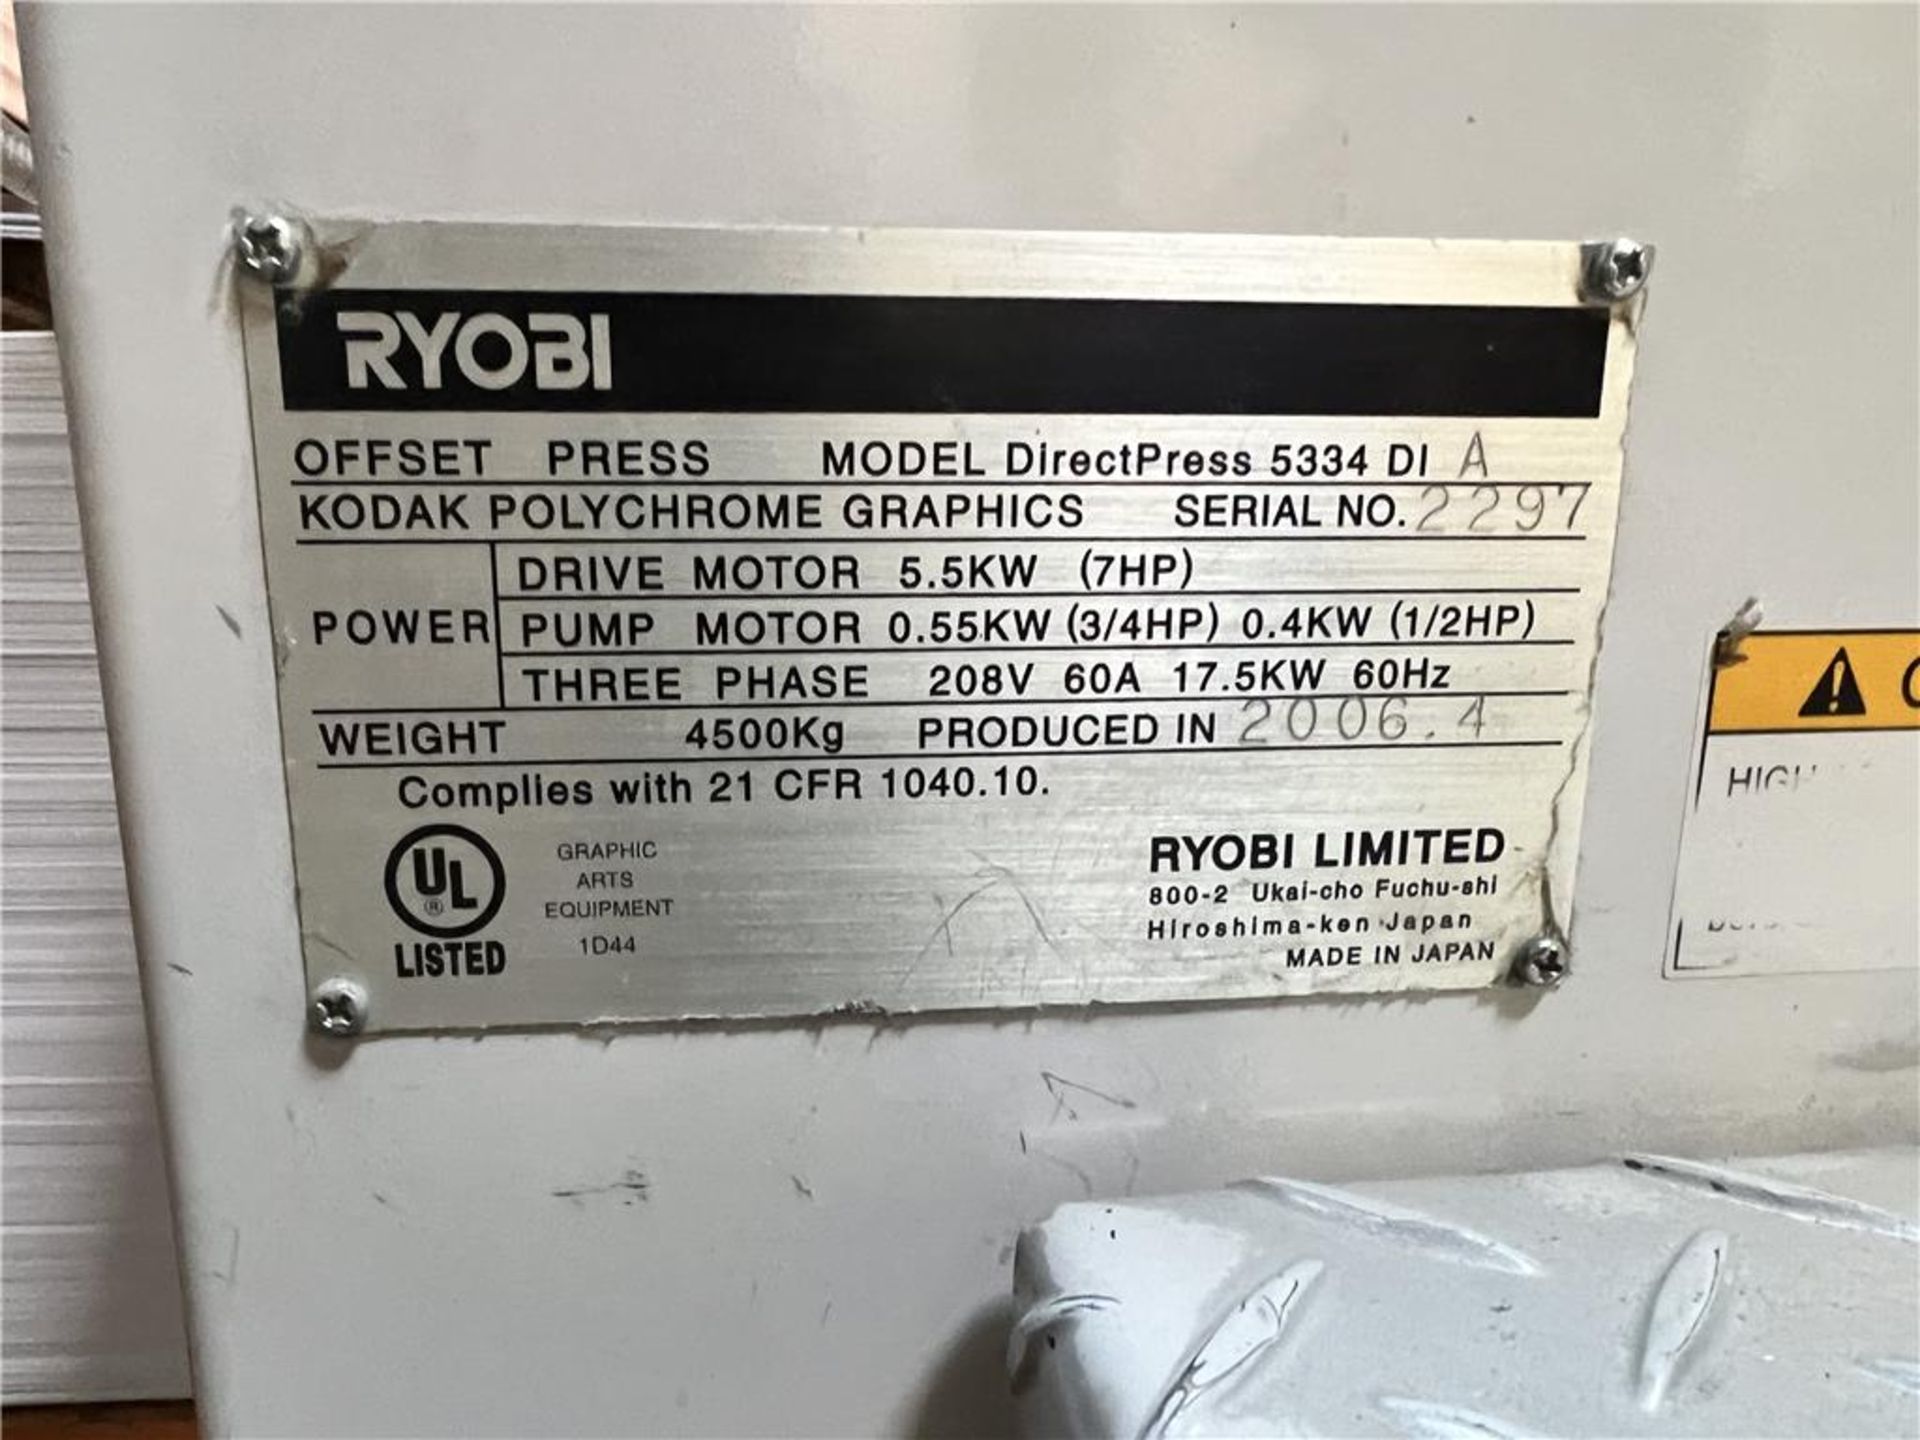 2006 RYOBI KODAK POLYCHROME DIRECTPRESS 5334 DI 4-COLOR DIGITAL OFFSET PRINTING PRESS, 3PH, 7HP - Image 2 of 13